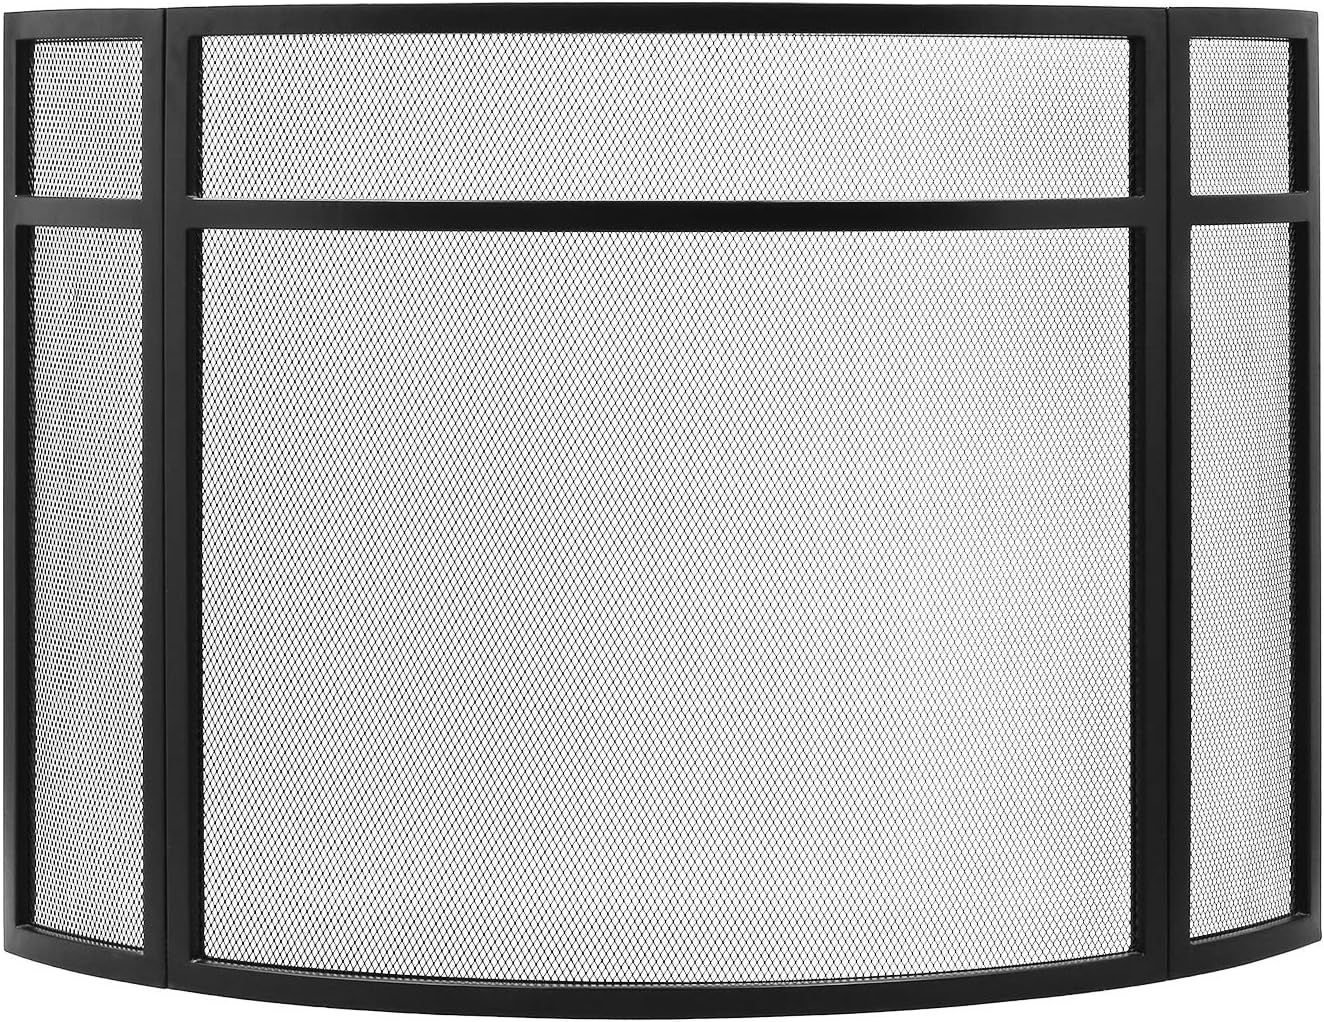 Minuteman International X800493 Panelled Curved Three-Fold Fireplace Screen, Black